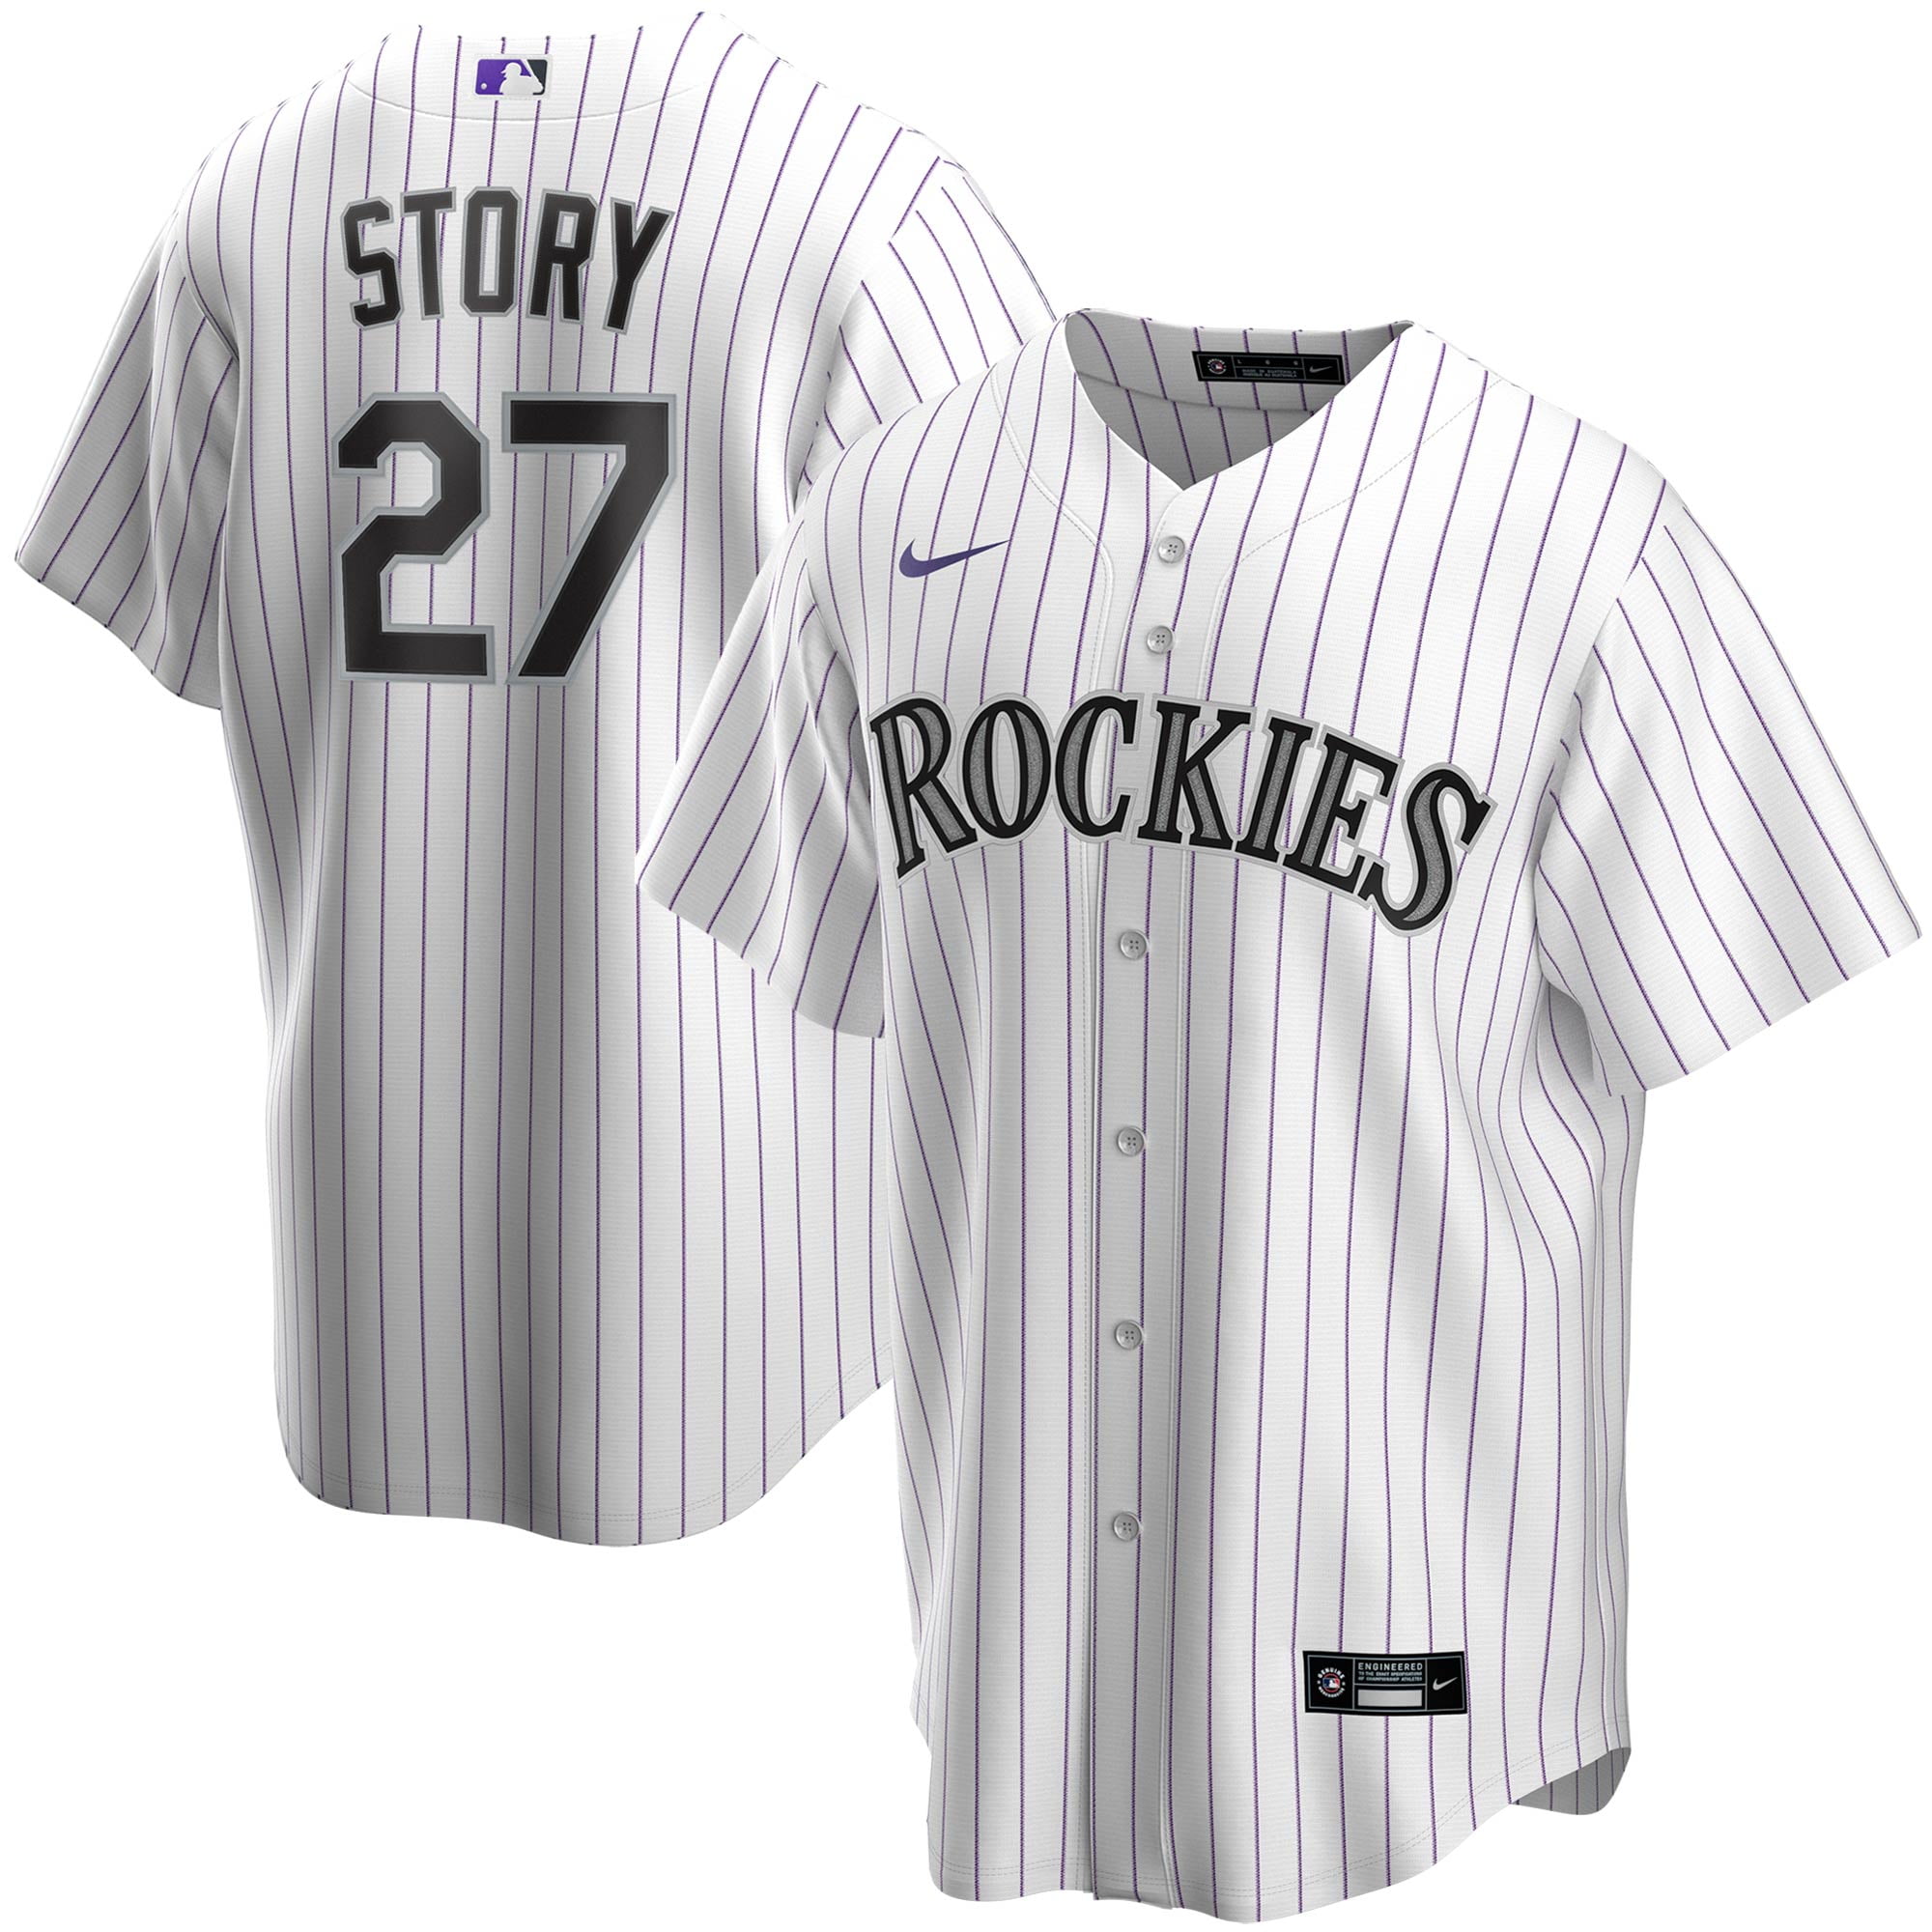 story rockies jersey